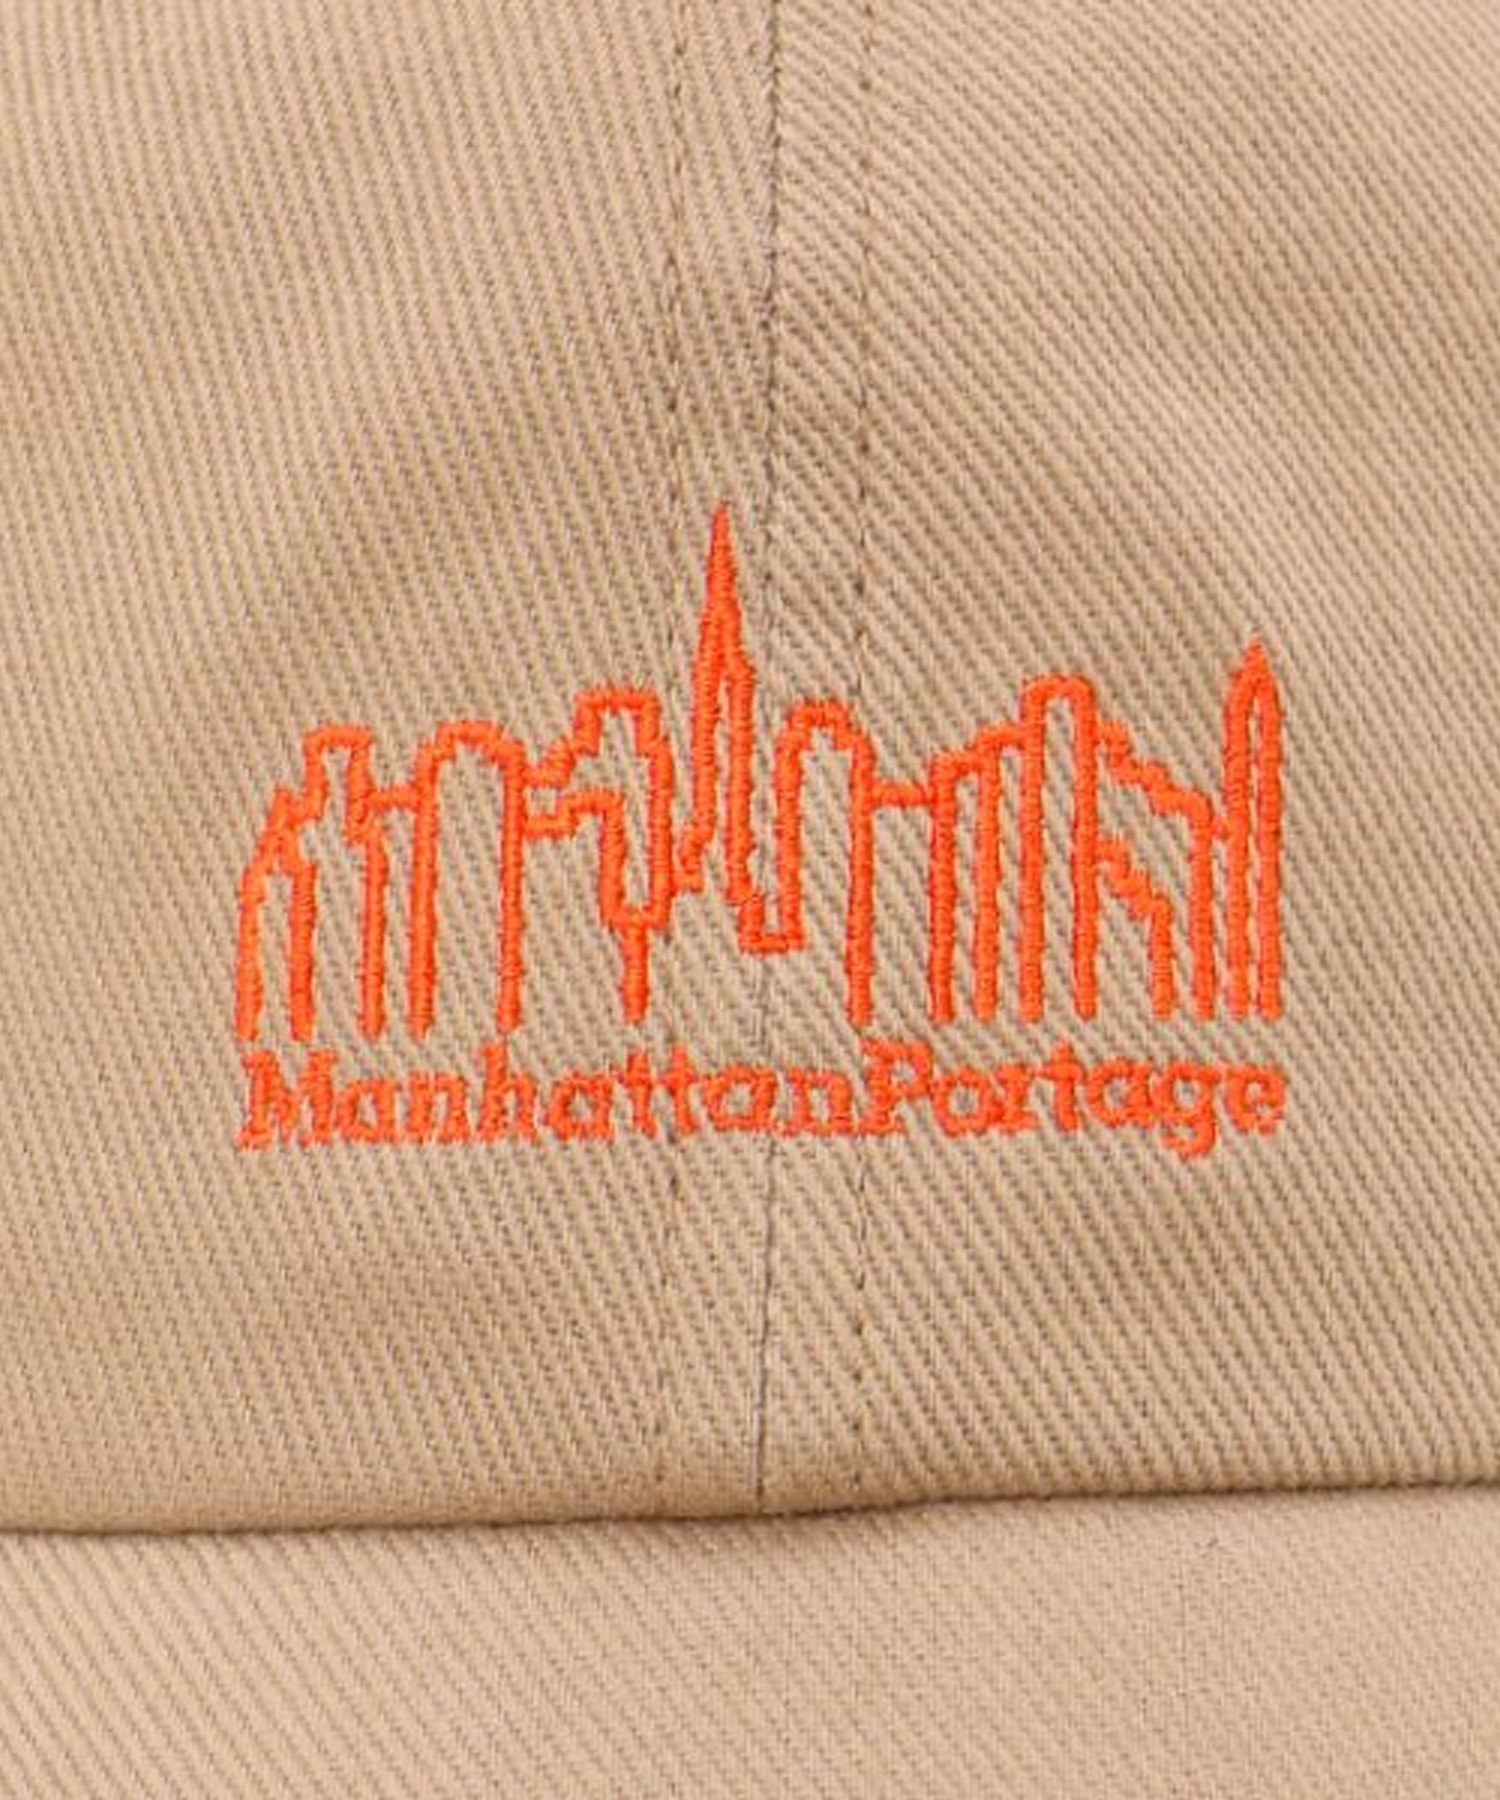 Manhattan Portage/マンハッタンポーテージ Graphic Embroidery 6 Panel Cap キャップ 帽子 フリーサイズ MP220(RD/OR-FREE)